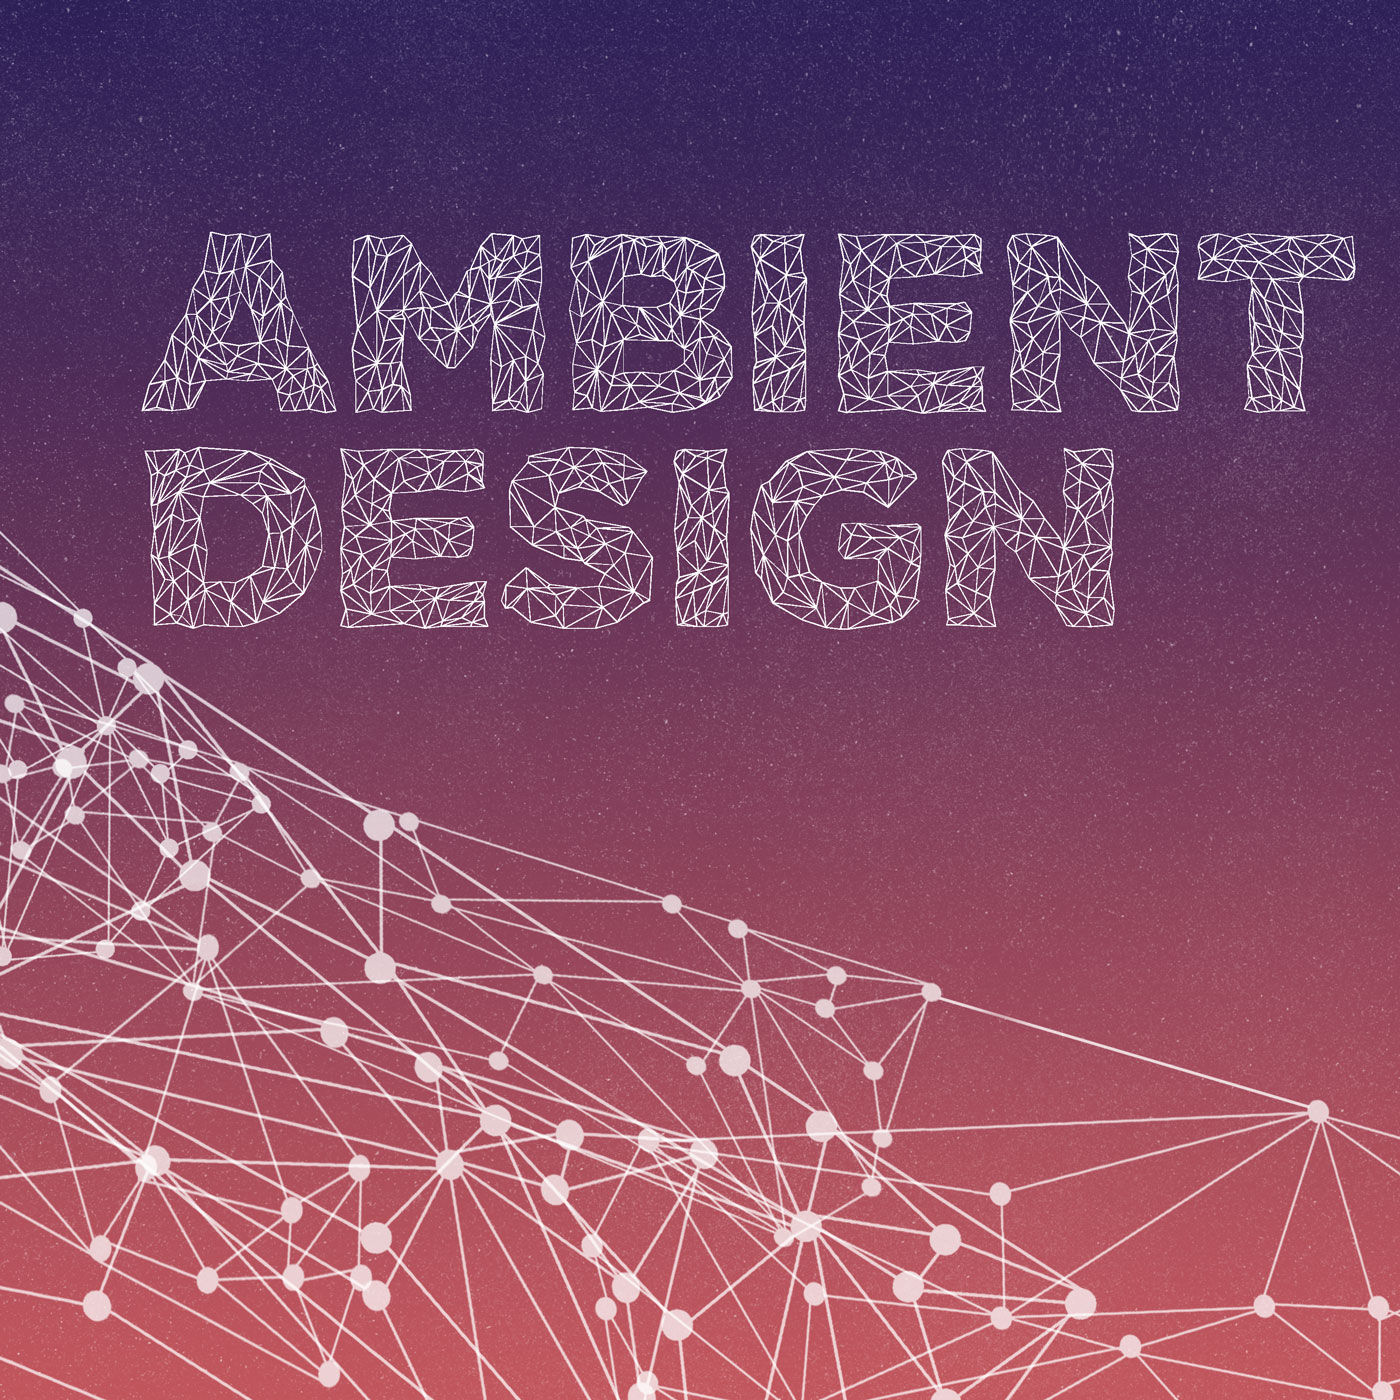 New Library Album: Ambient Design